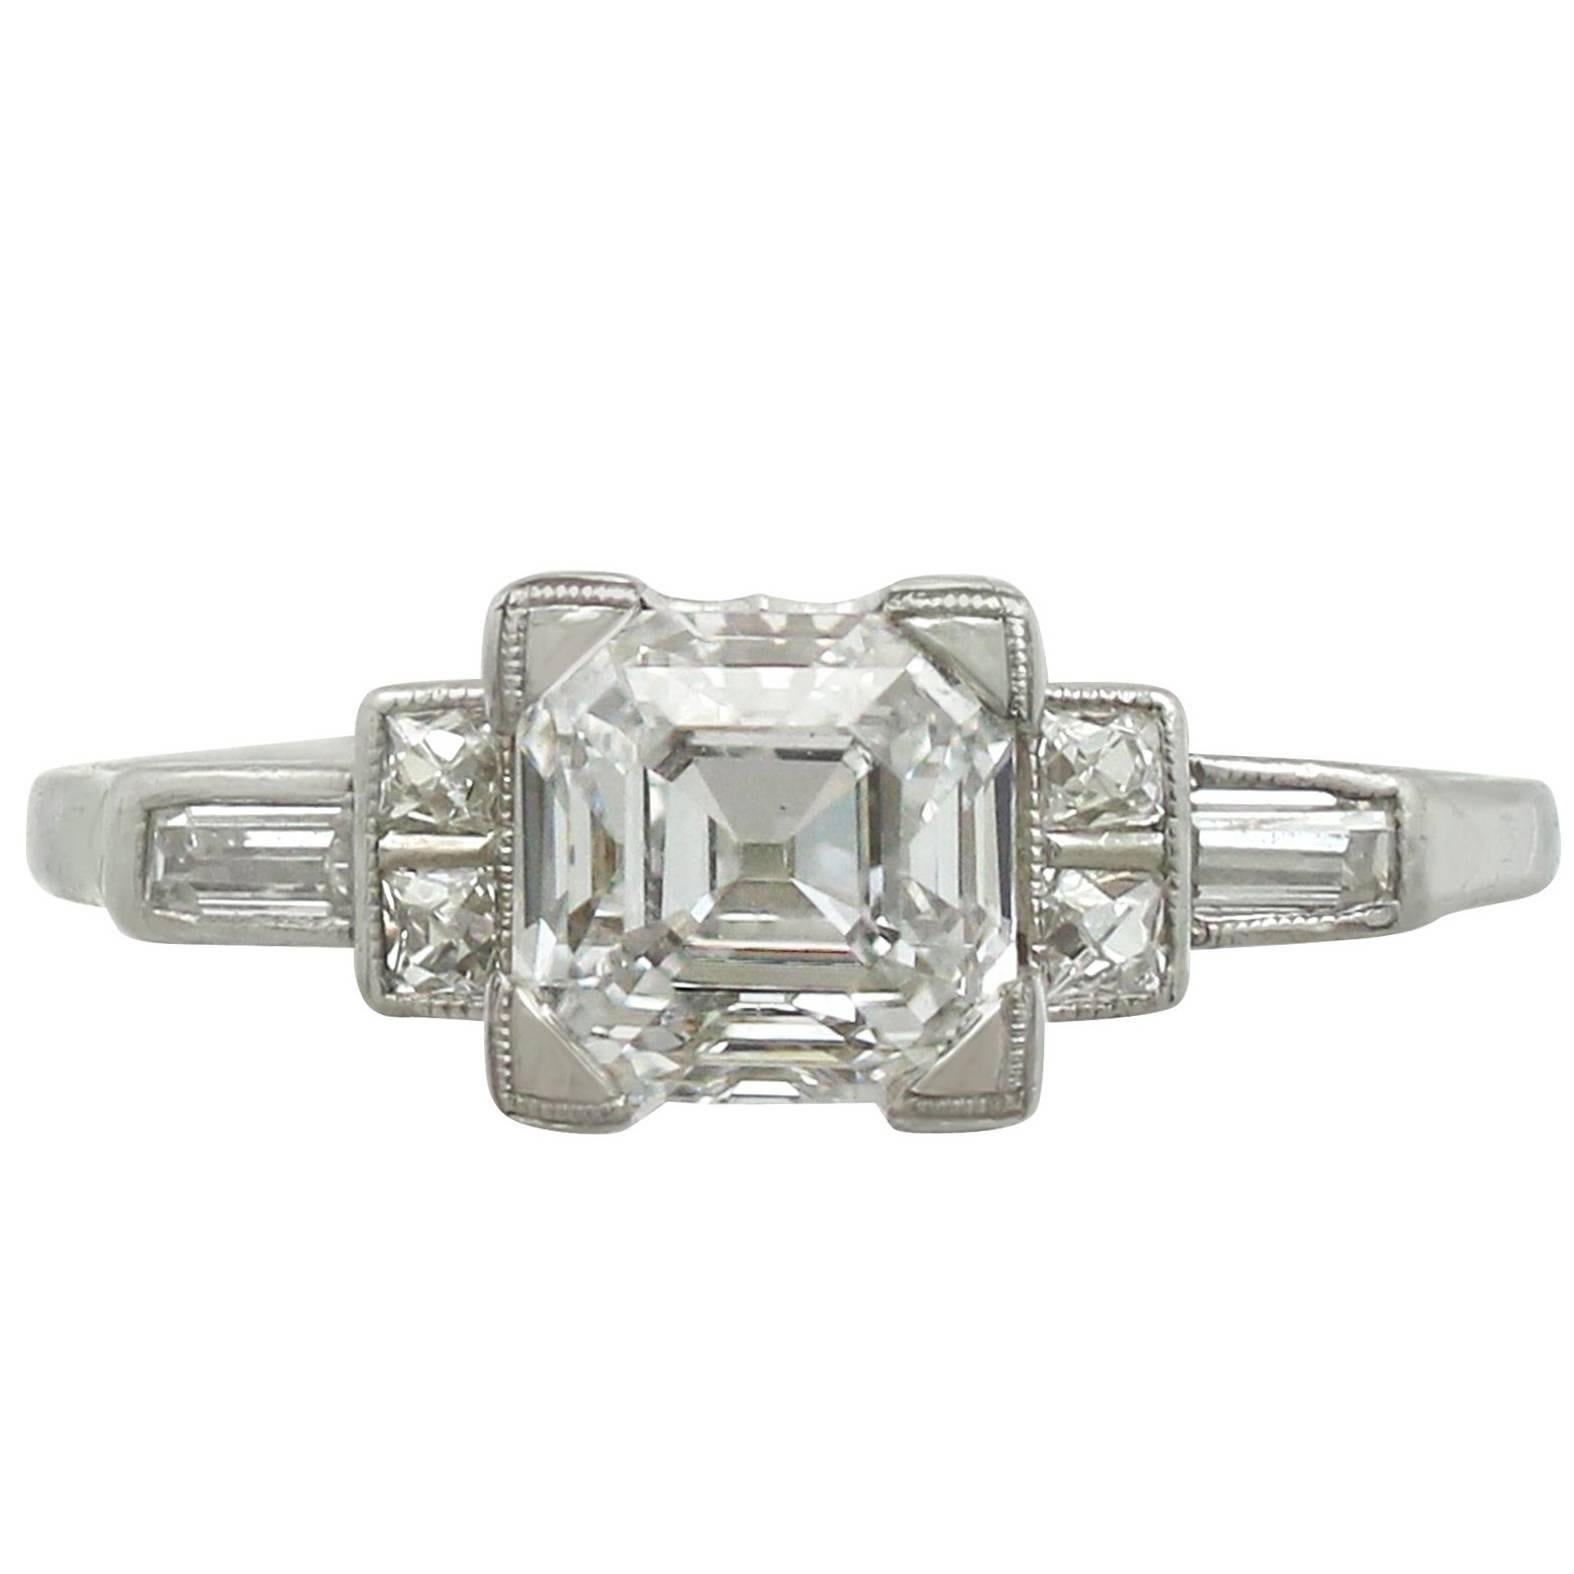 1930s 1.76 Carat Diamond and Platinum Solitaire Engagement Ring